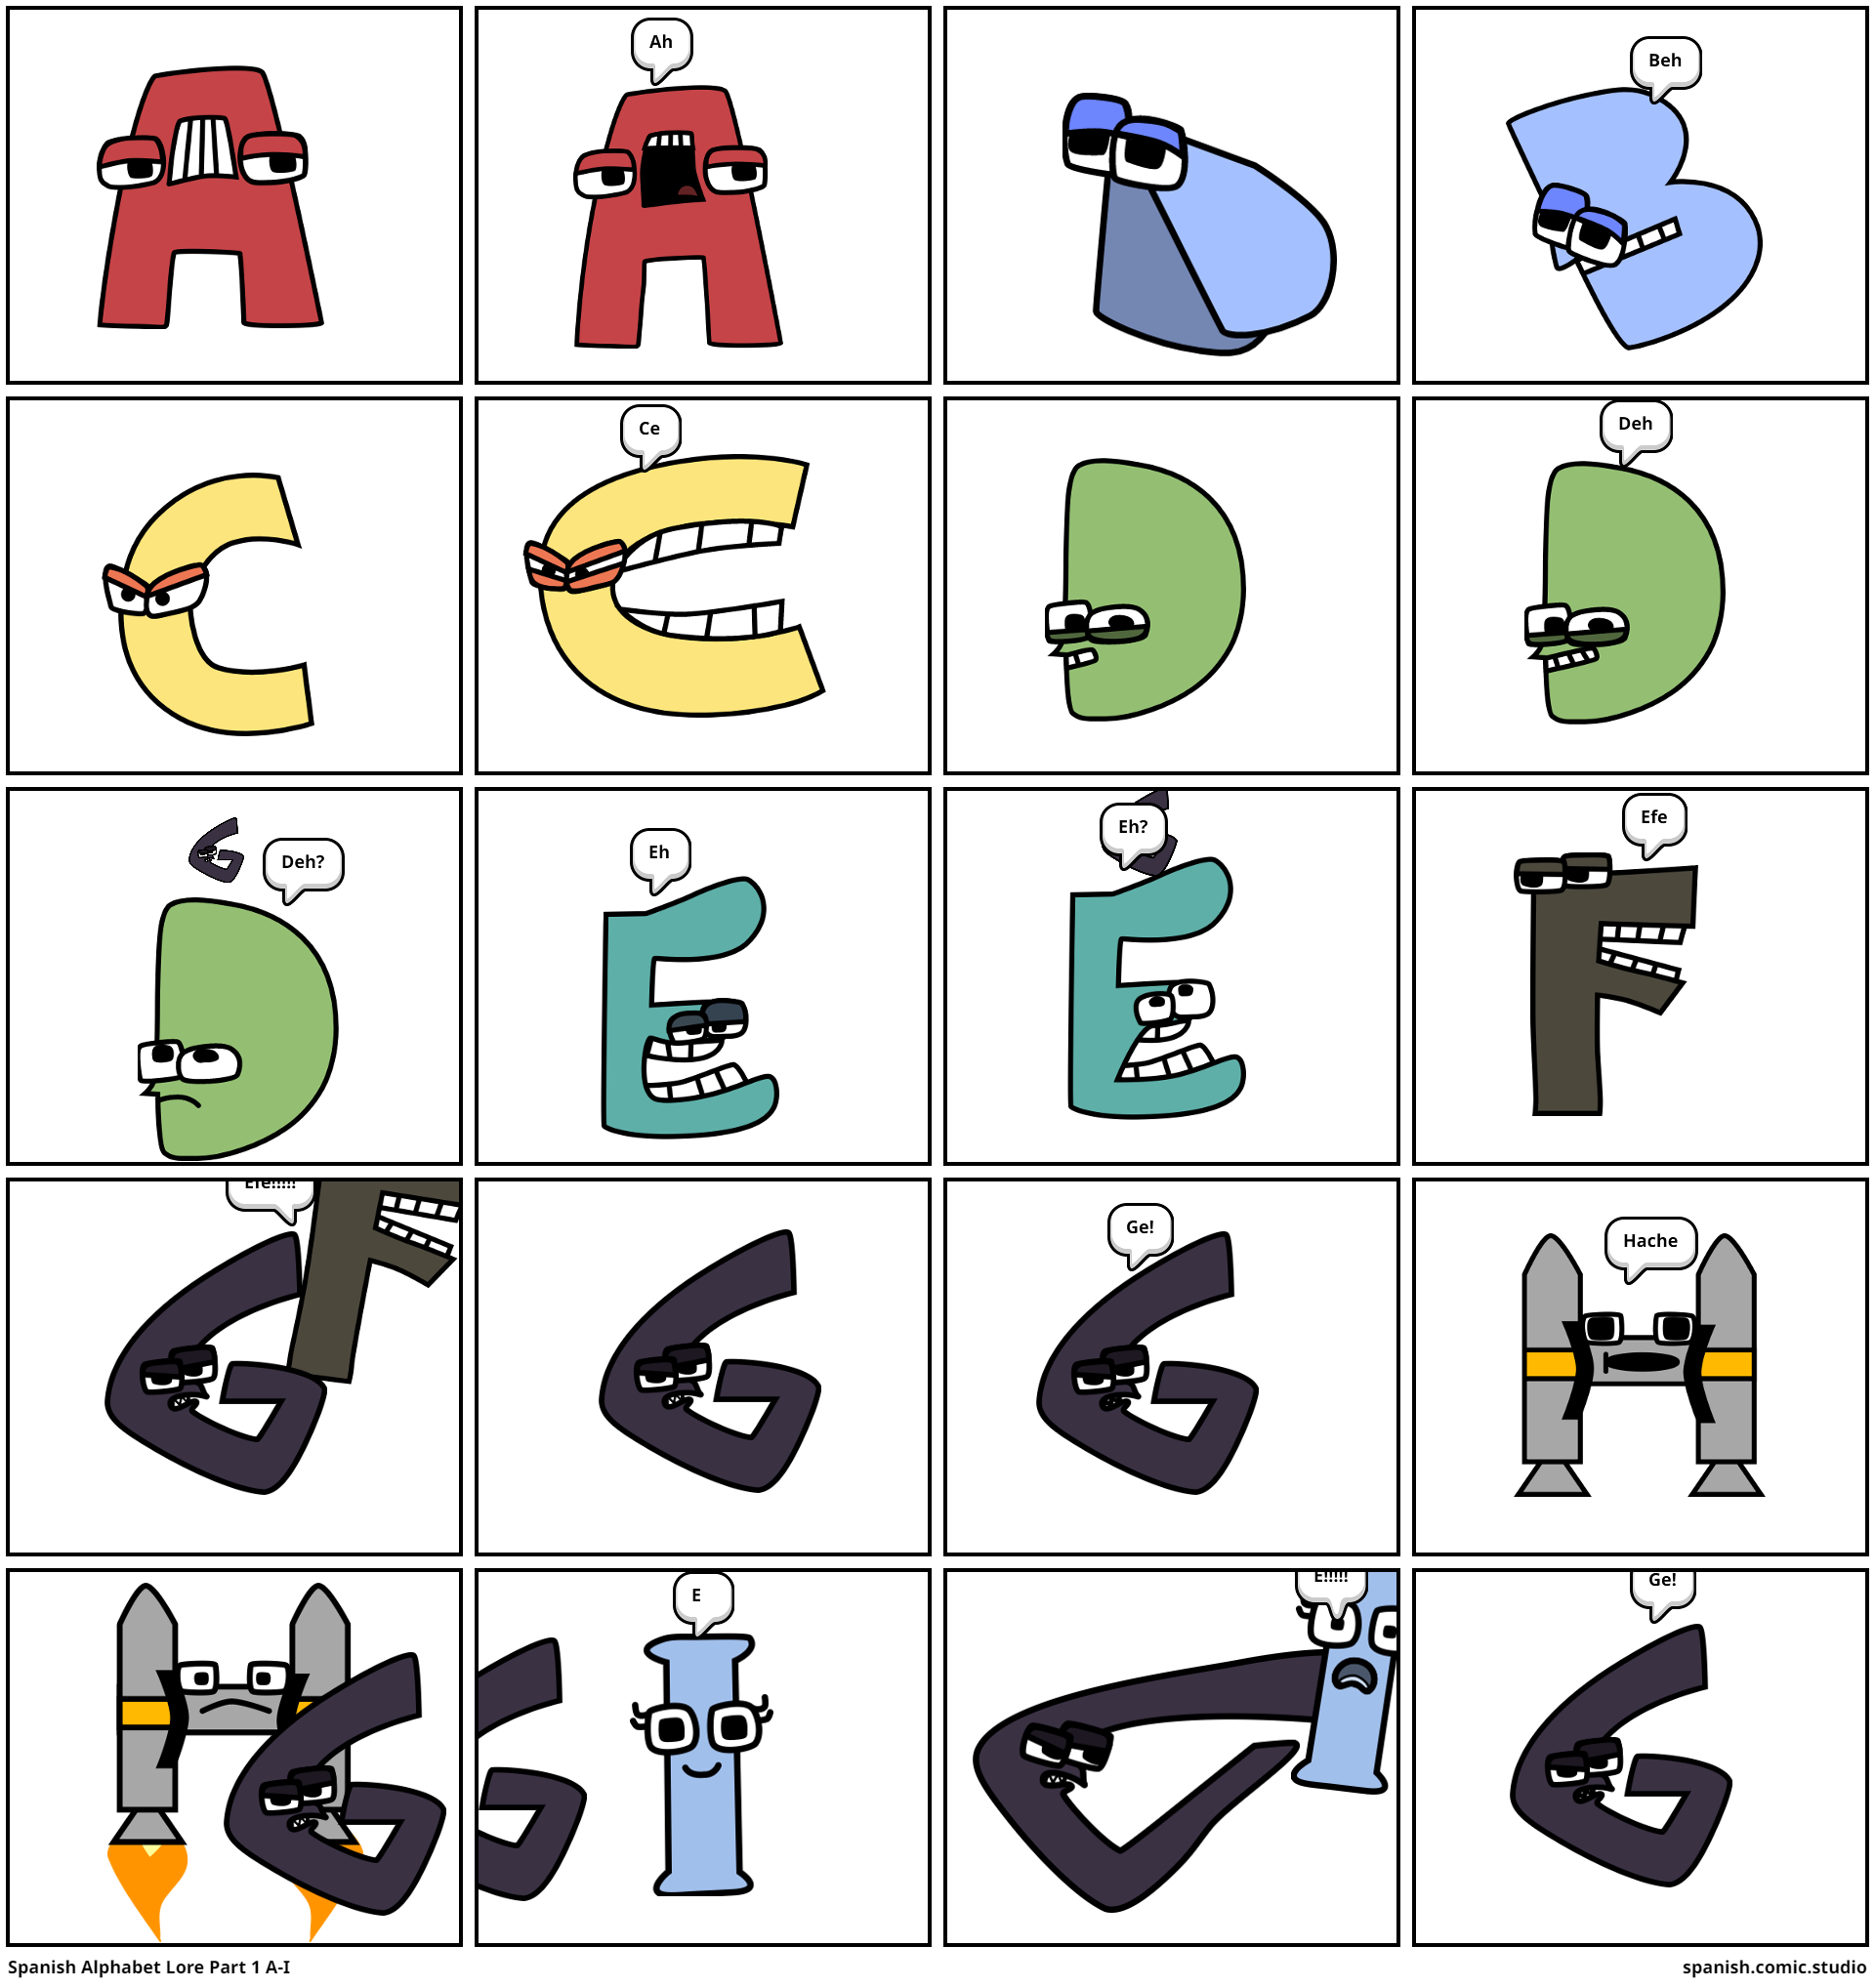 Spanish alphabet lore lowercase villian: Č - Comic Studio